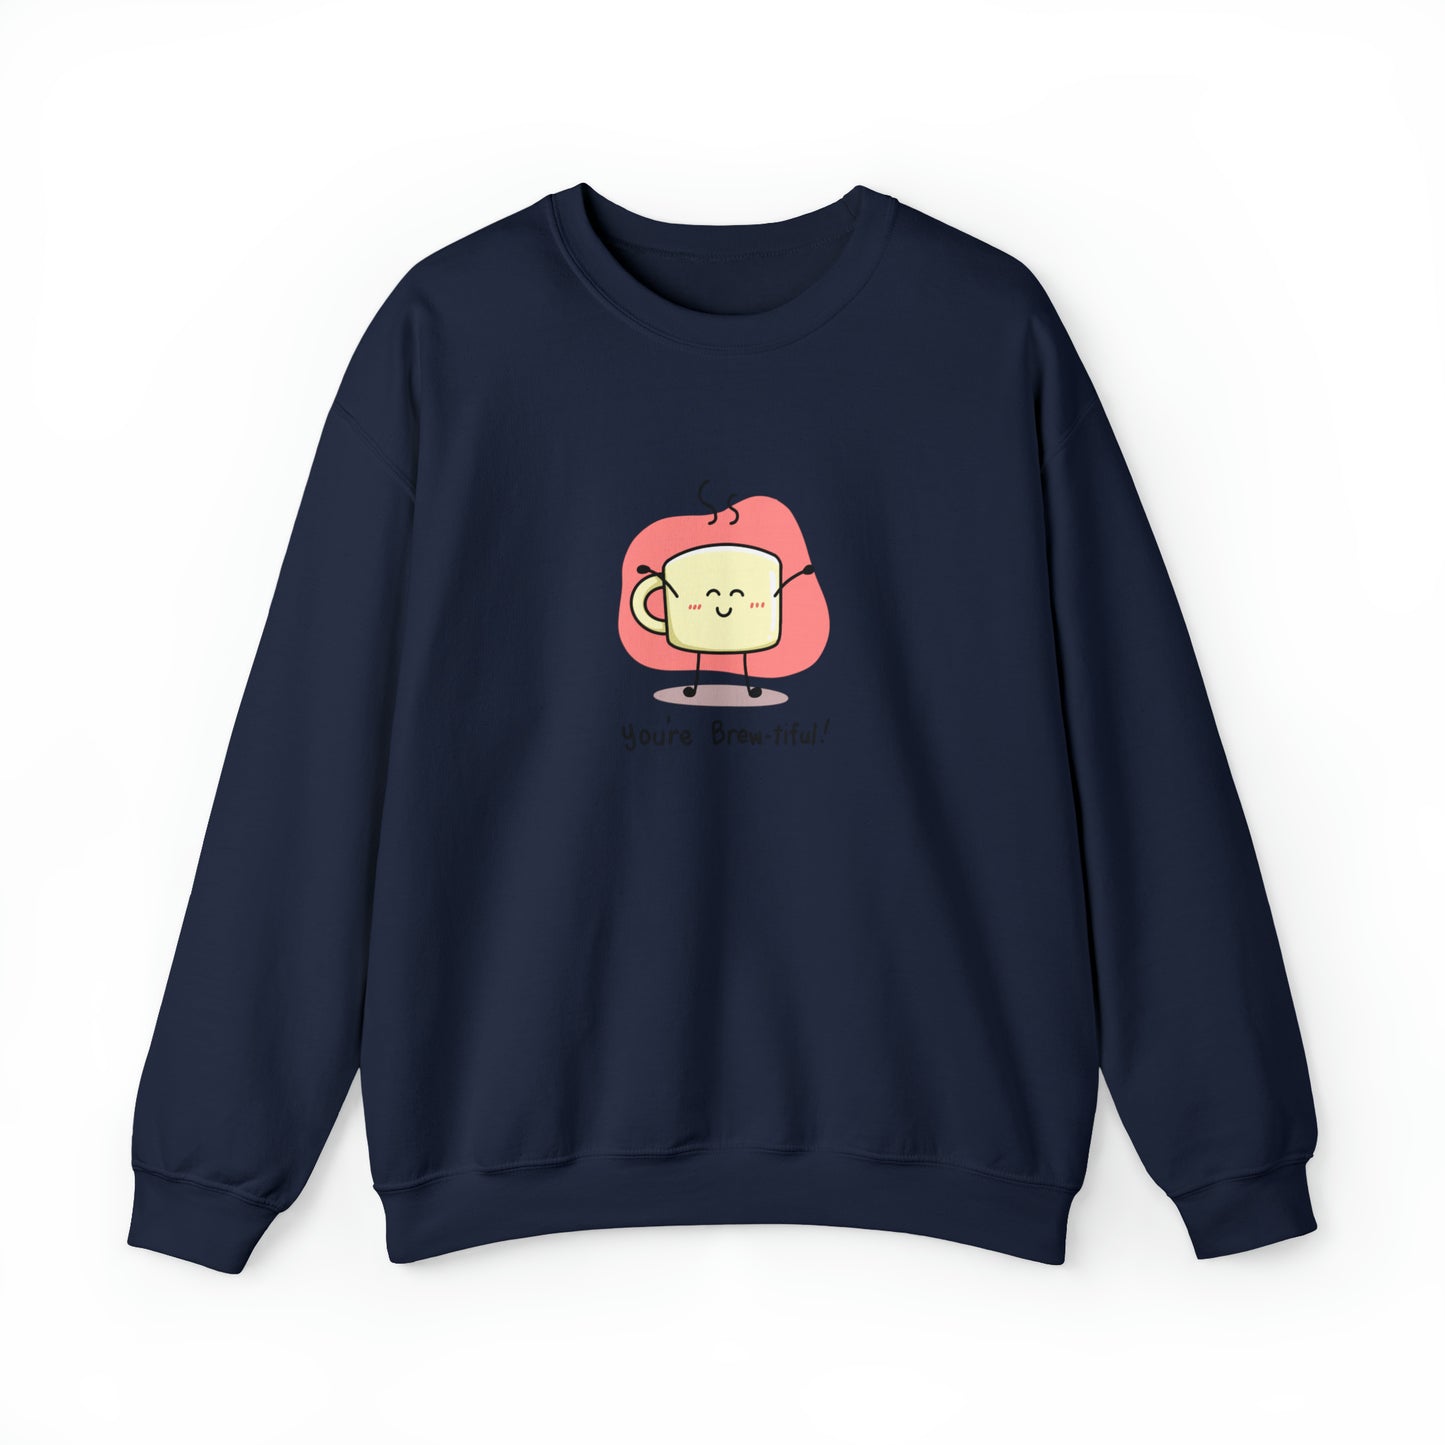 Custom Parody Crewneck Sweatshirt, You're Brewtiful Design